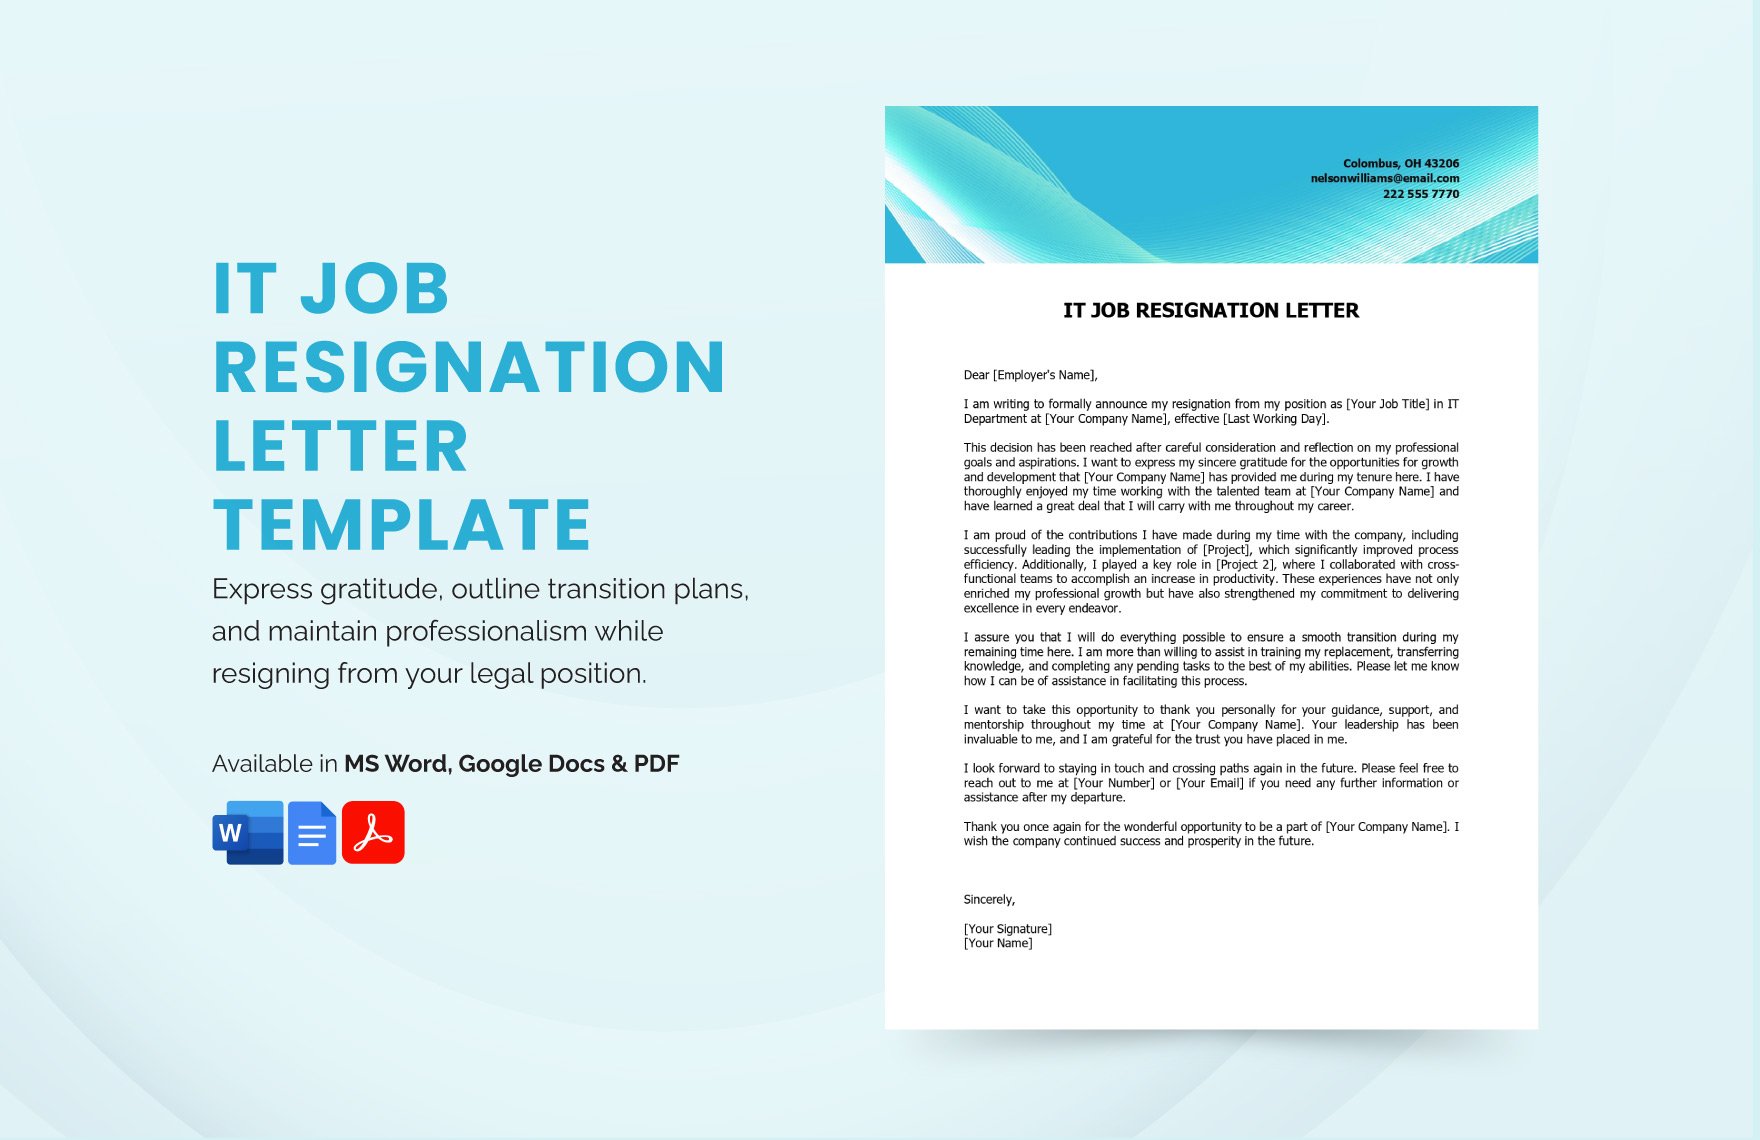 IT Job Resignation Letter Template